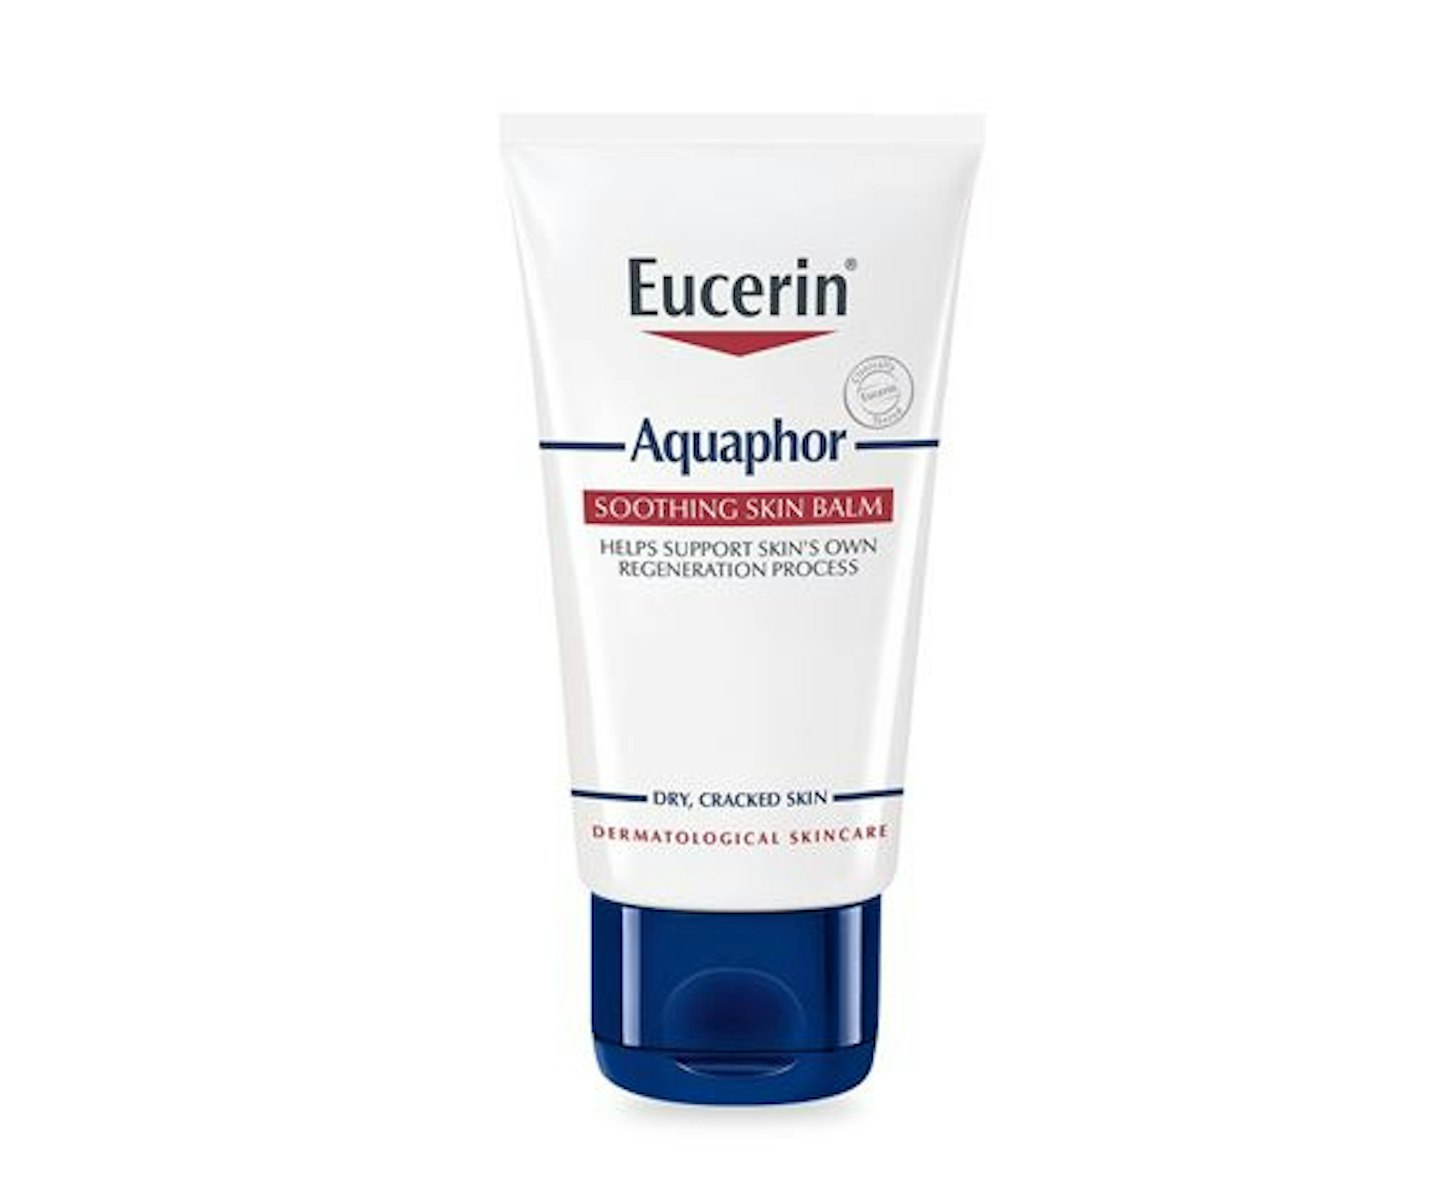 Eucerin Aquaphor Soothing Skin Balm, £9